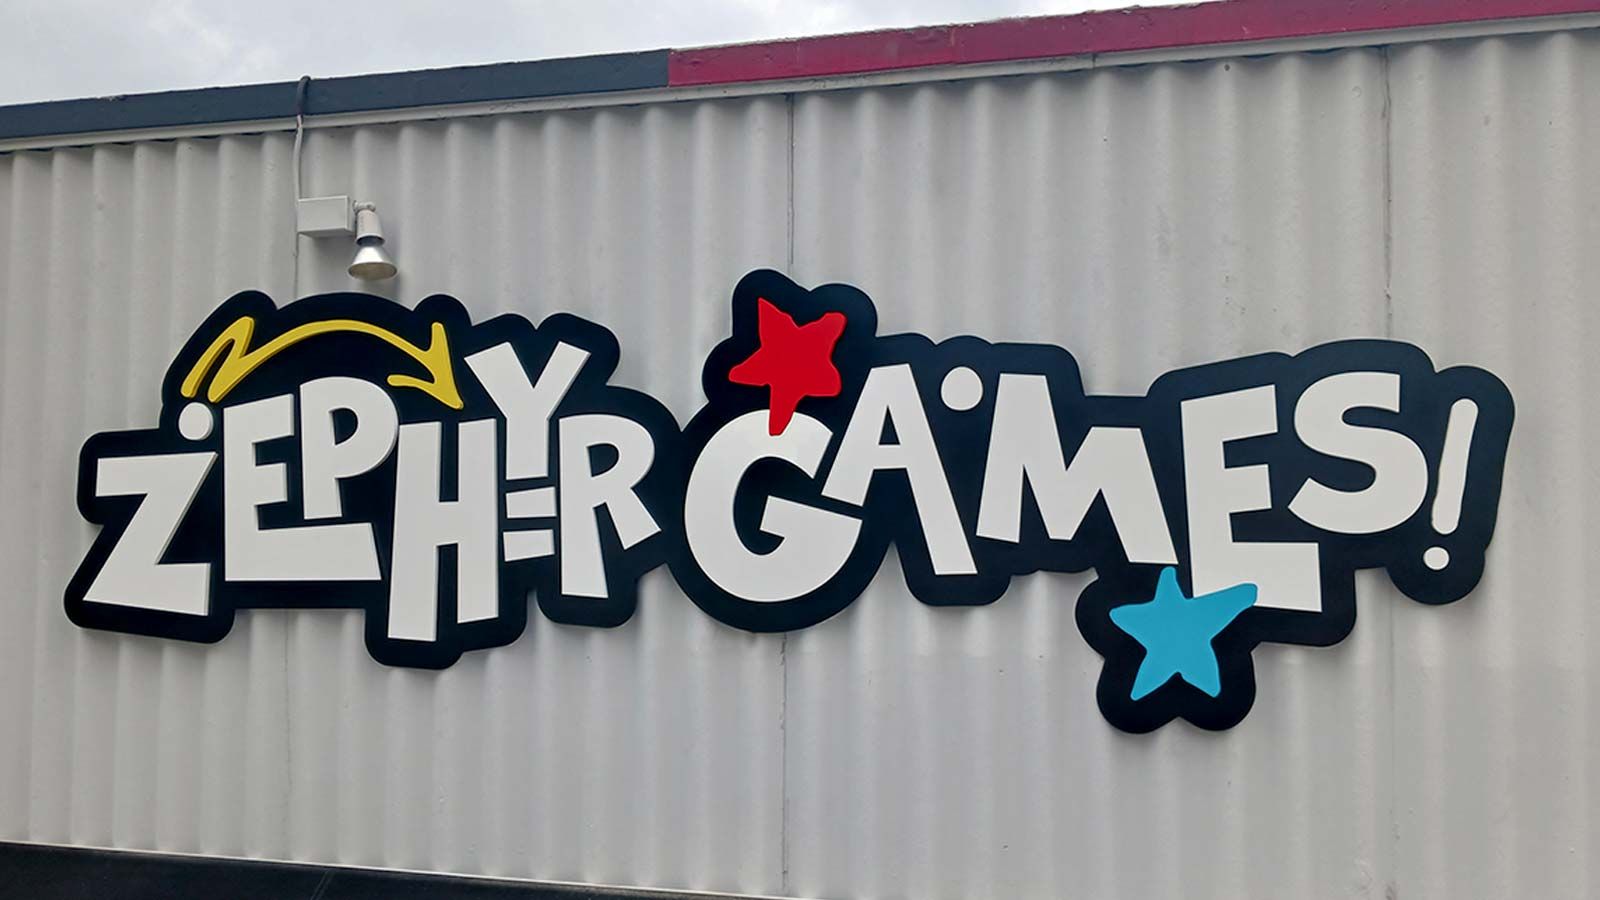 Zephyr Games logo sign set up outdoors